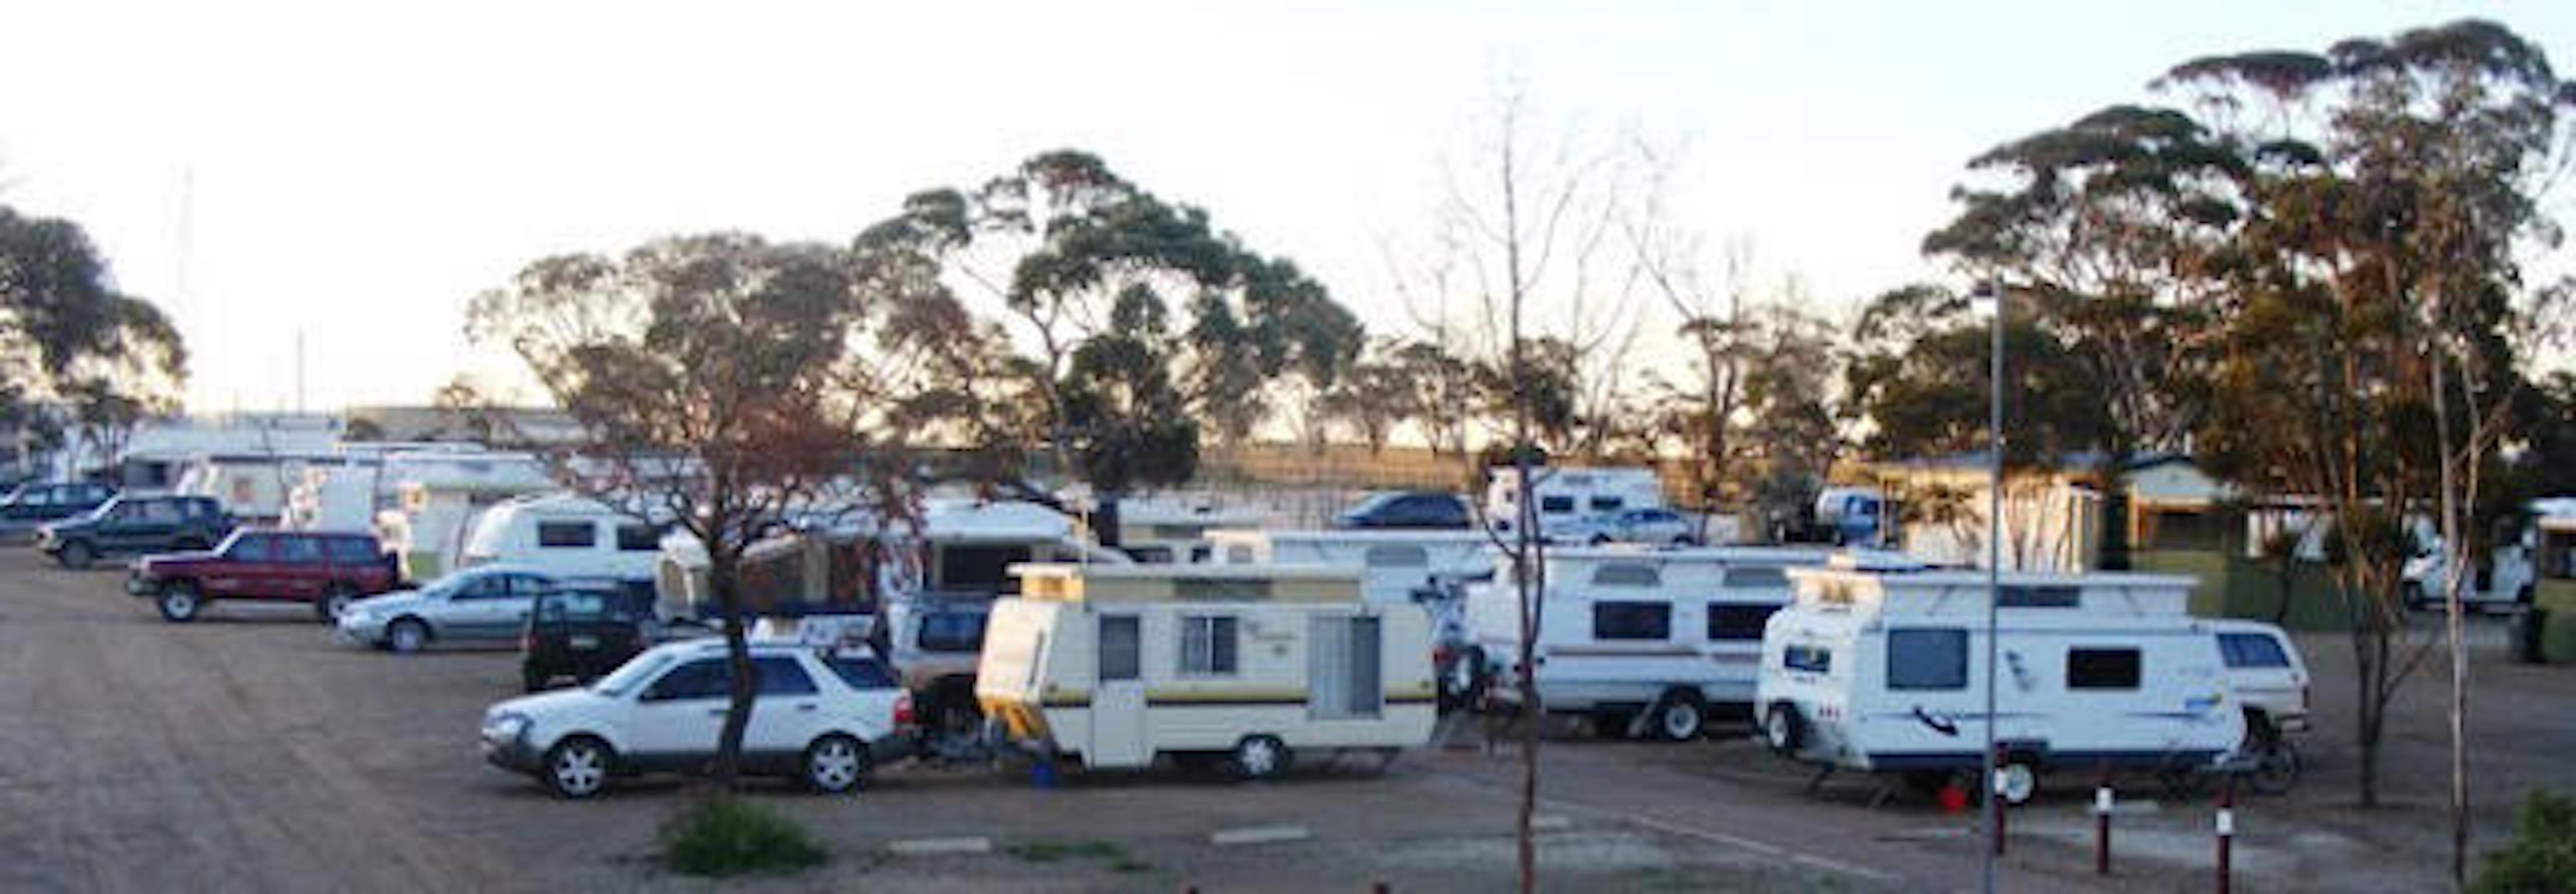 Woomera Traveller's Village and Caravan Park - Accommodation Adelaide